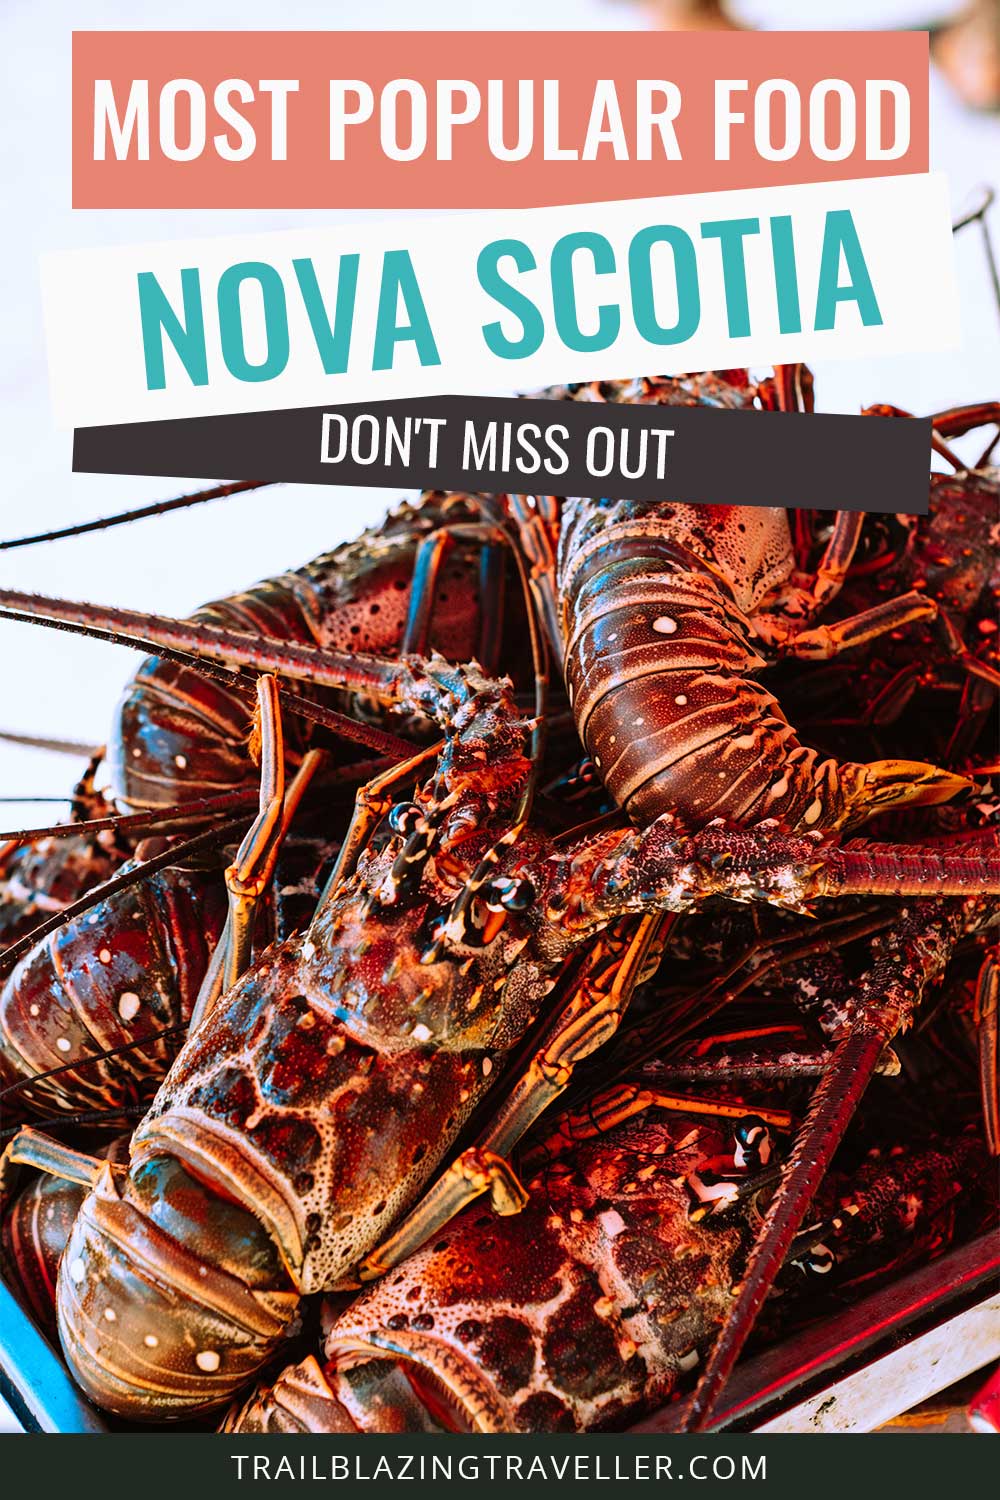 Most Popular Food Nova Scotia – Don’t Miss Out